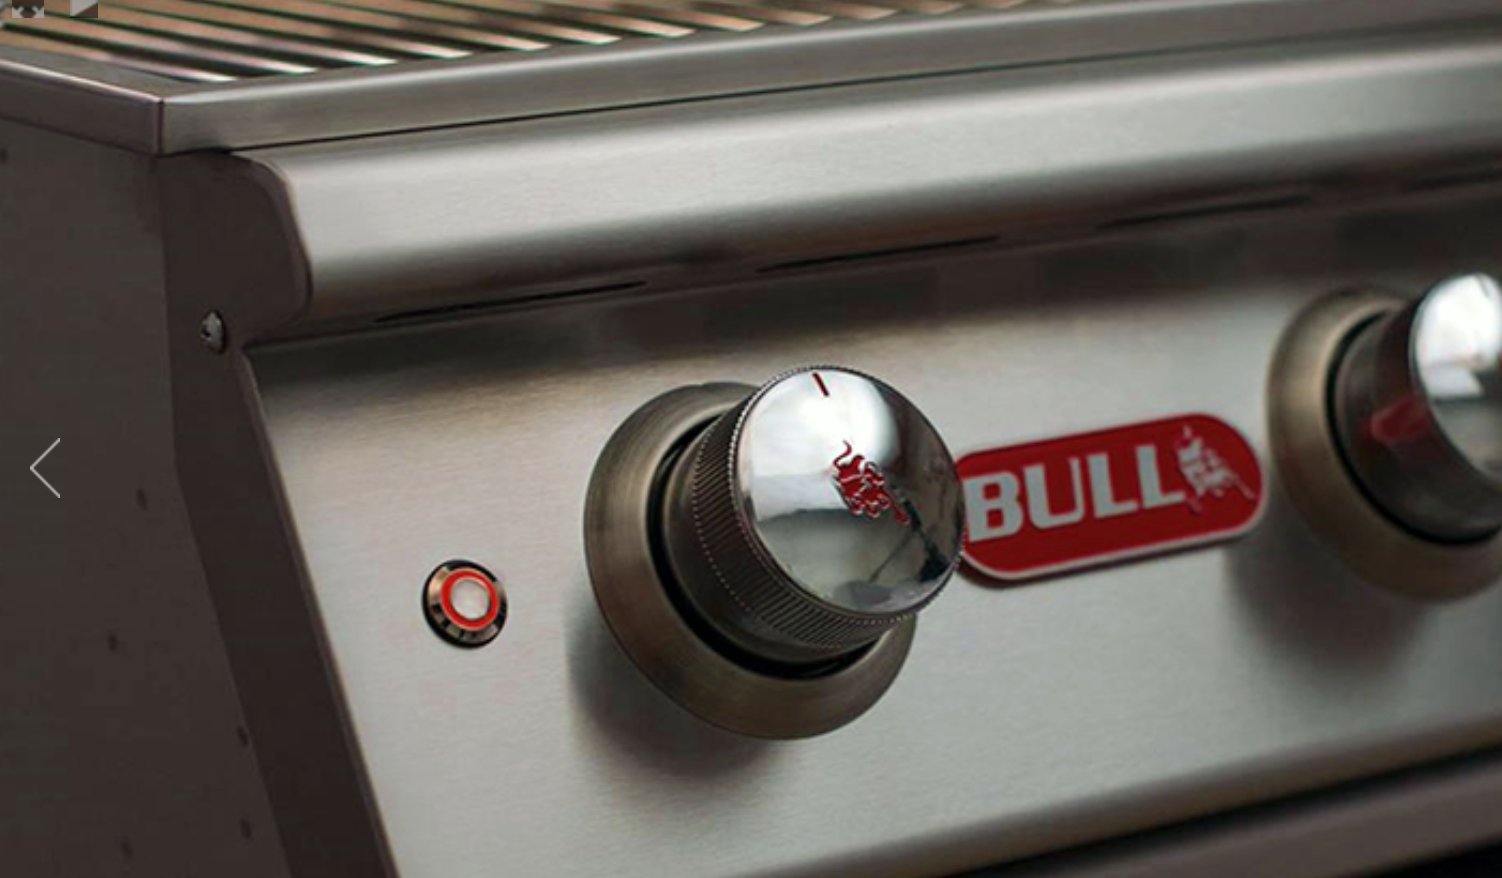 Bull Outlaw BBQ (Liquid Propane) - The Outdoor Kitchen Company Ltd